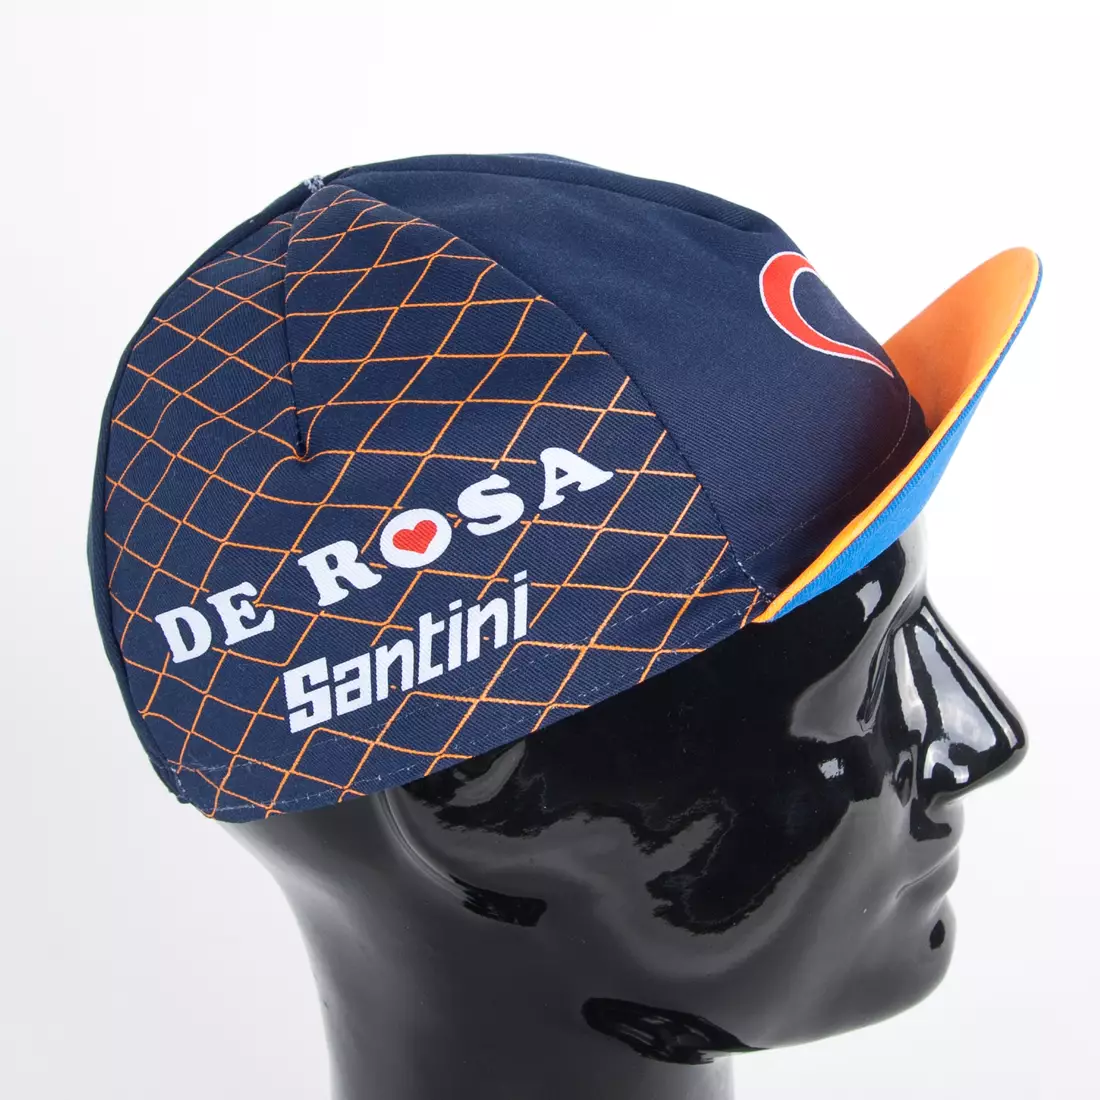 Apis Profi kerékpáros sapka DE ROSA SANTINI narancssárga visor v1